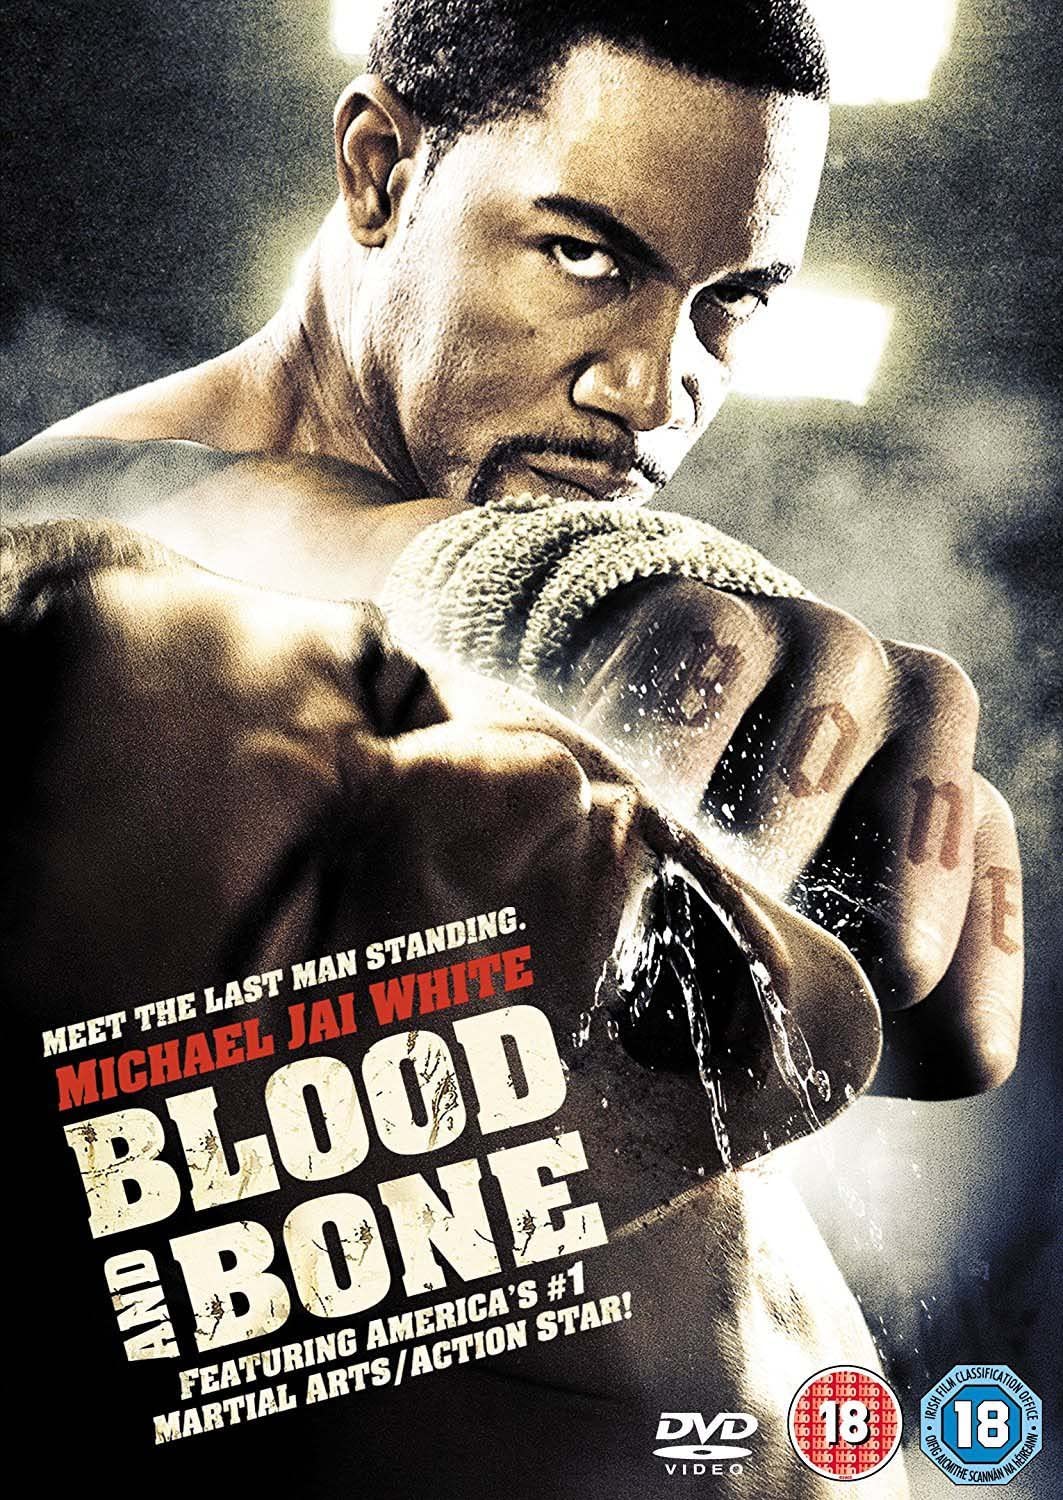 BLOOD & BONE [Action] [DVD]